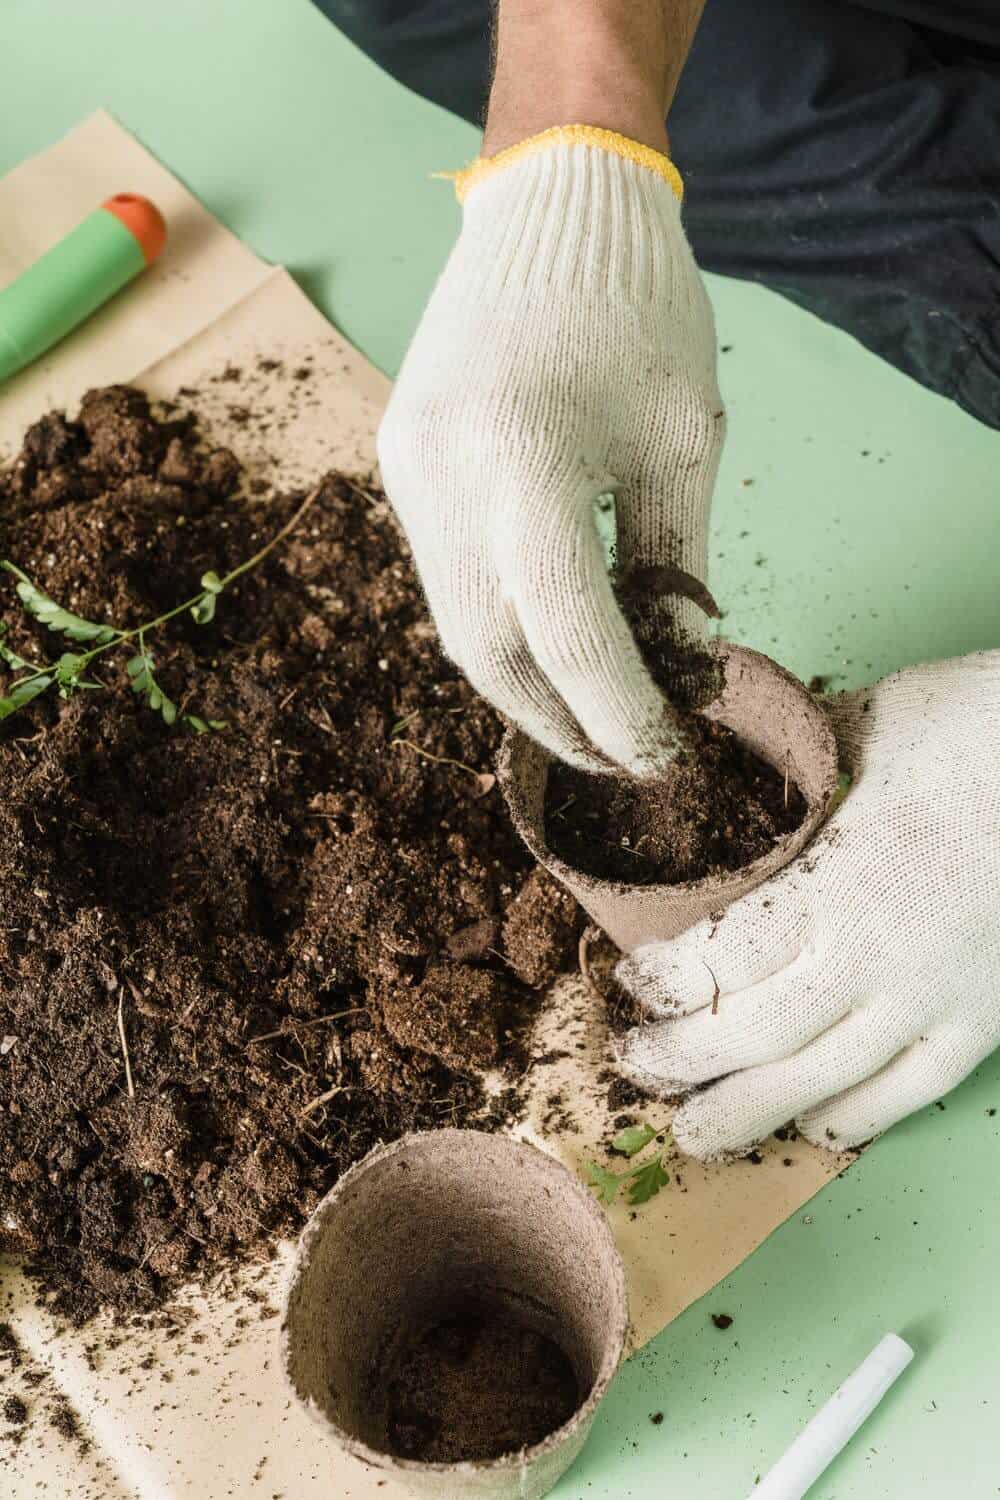 Hang with white glove transplanting seedlings in soil